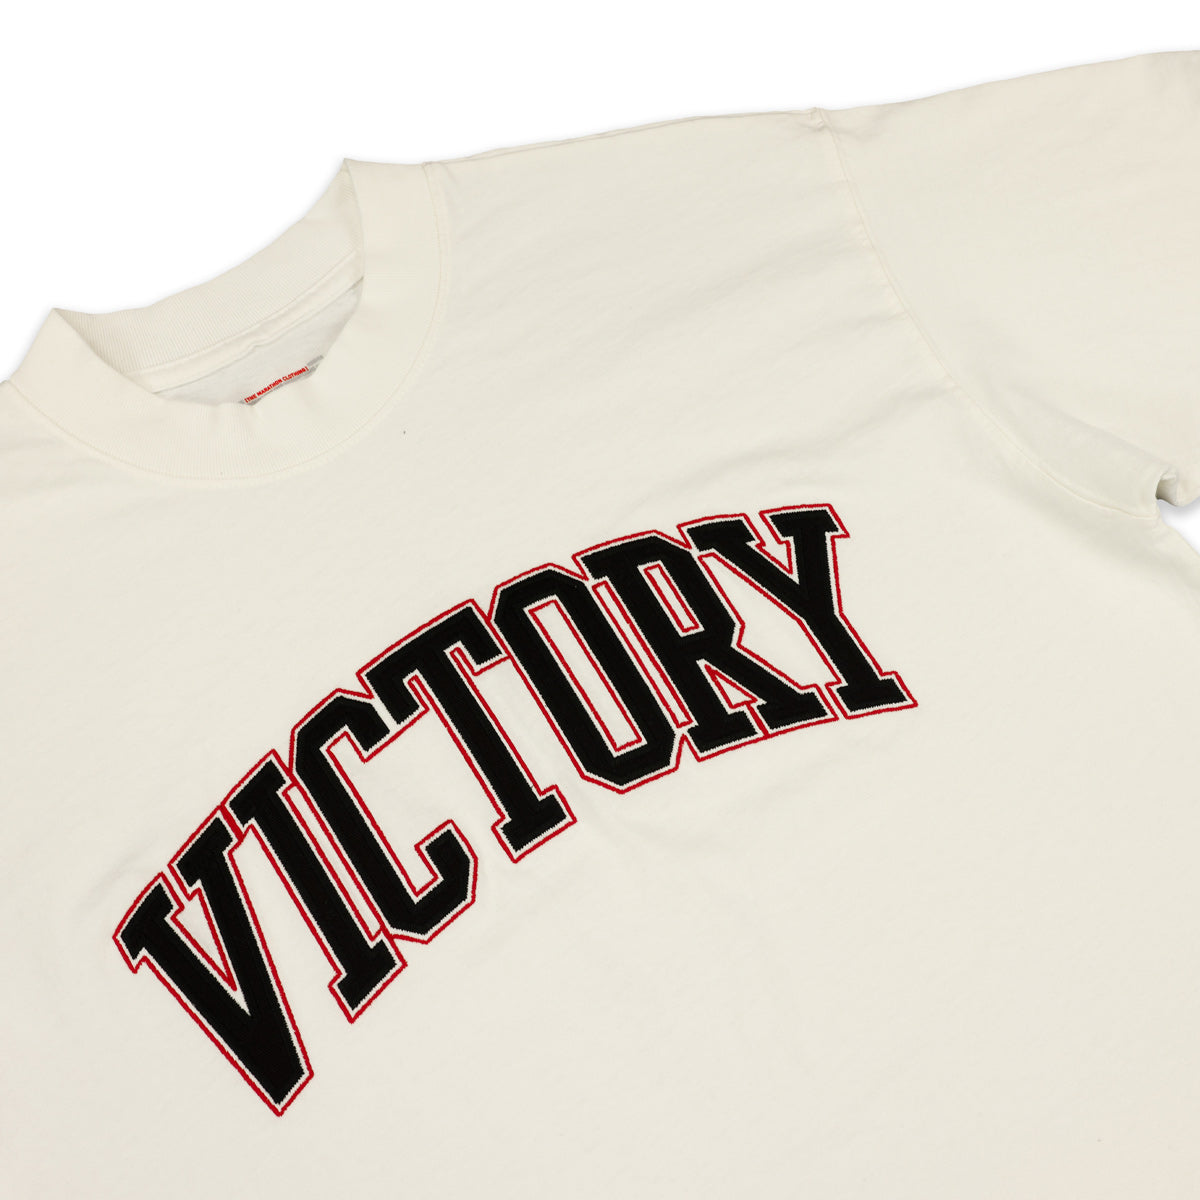 Vintage Embroidered Victory T-Shirt - Vintage White/Black